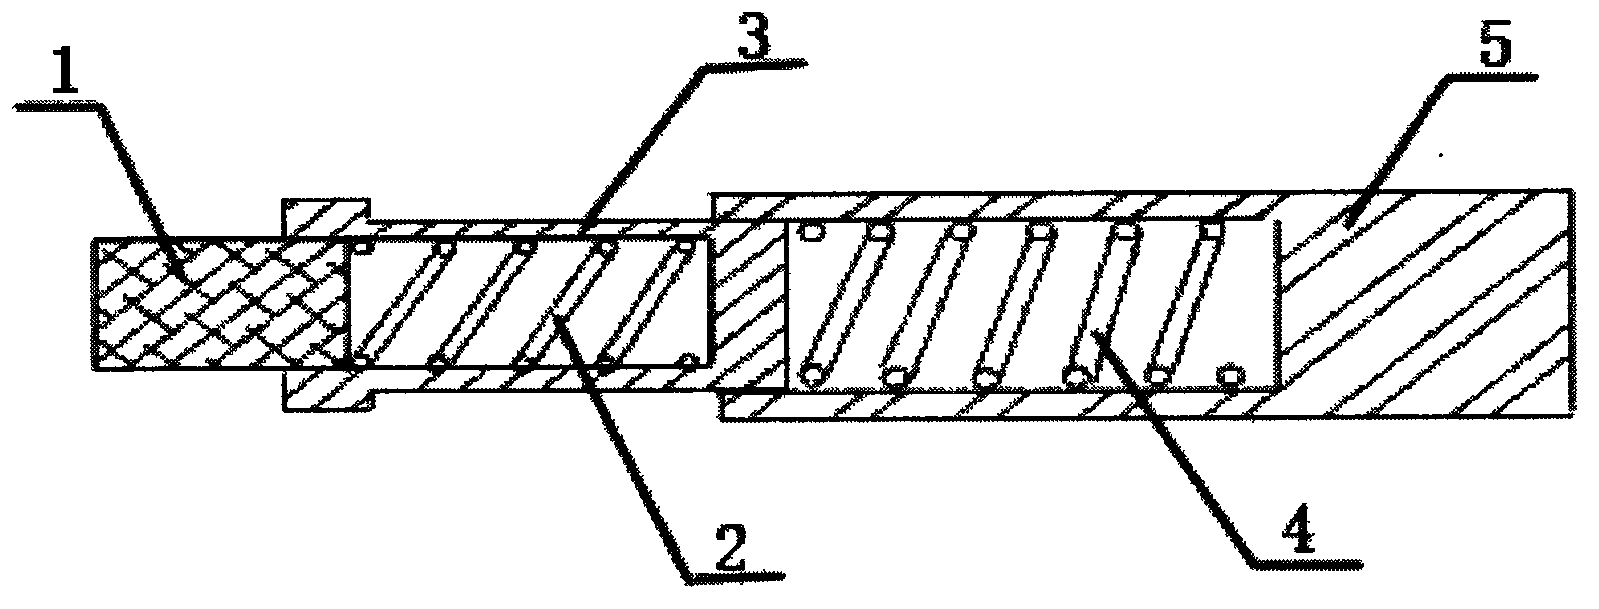 Buffer structure for machine head of knitting machine